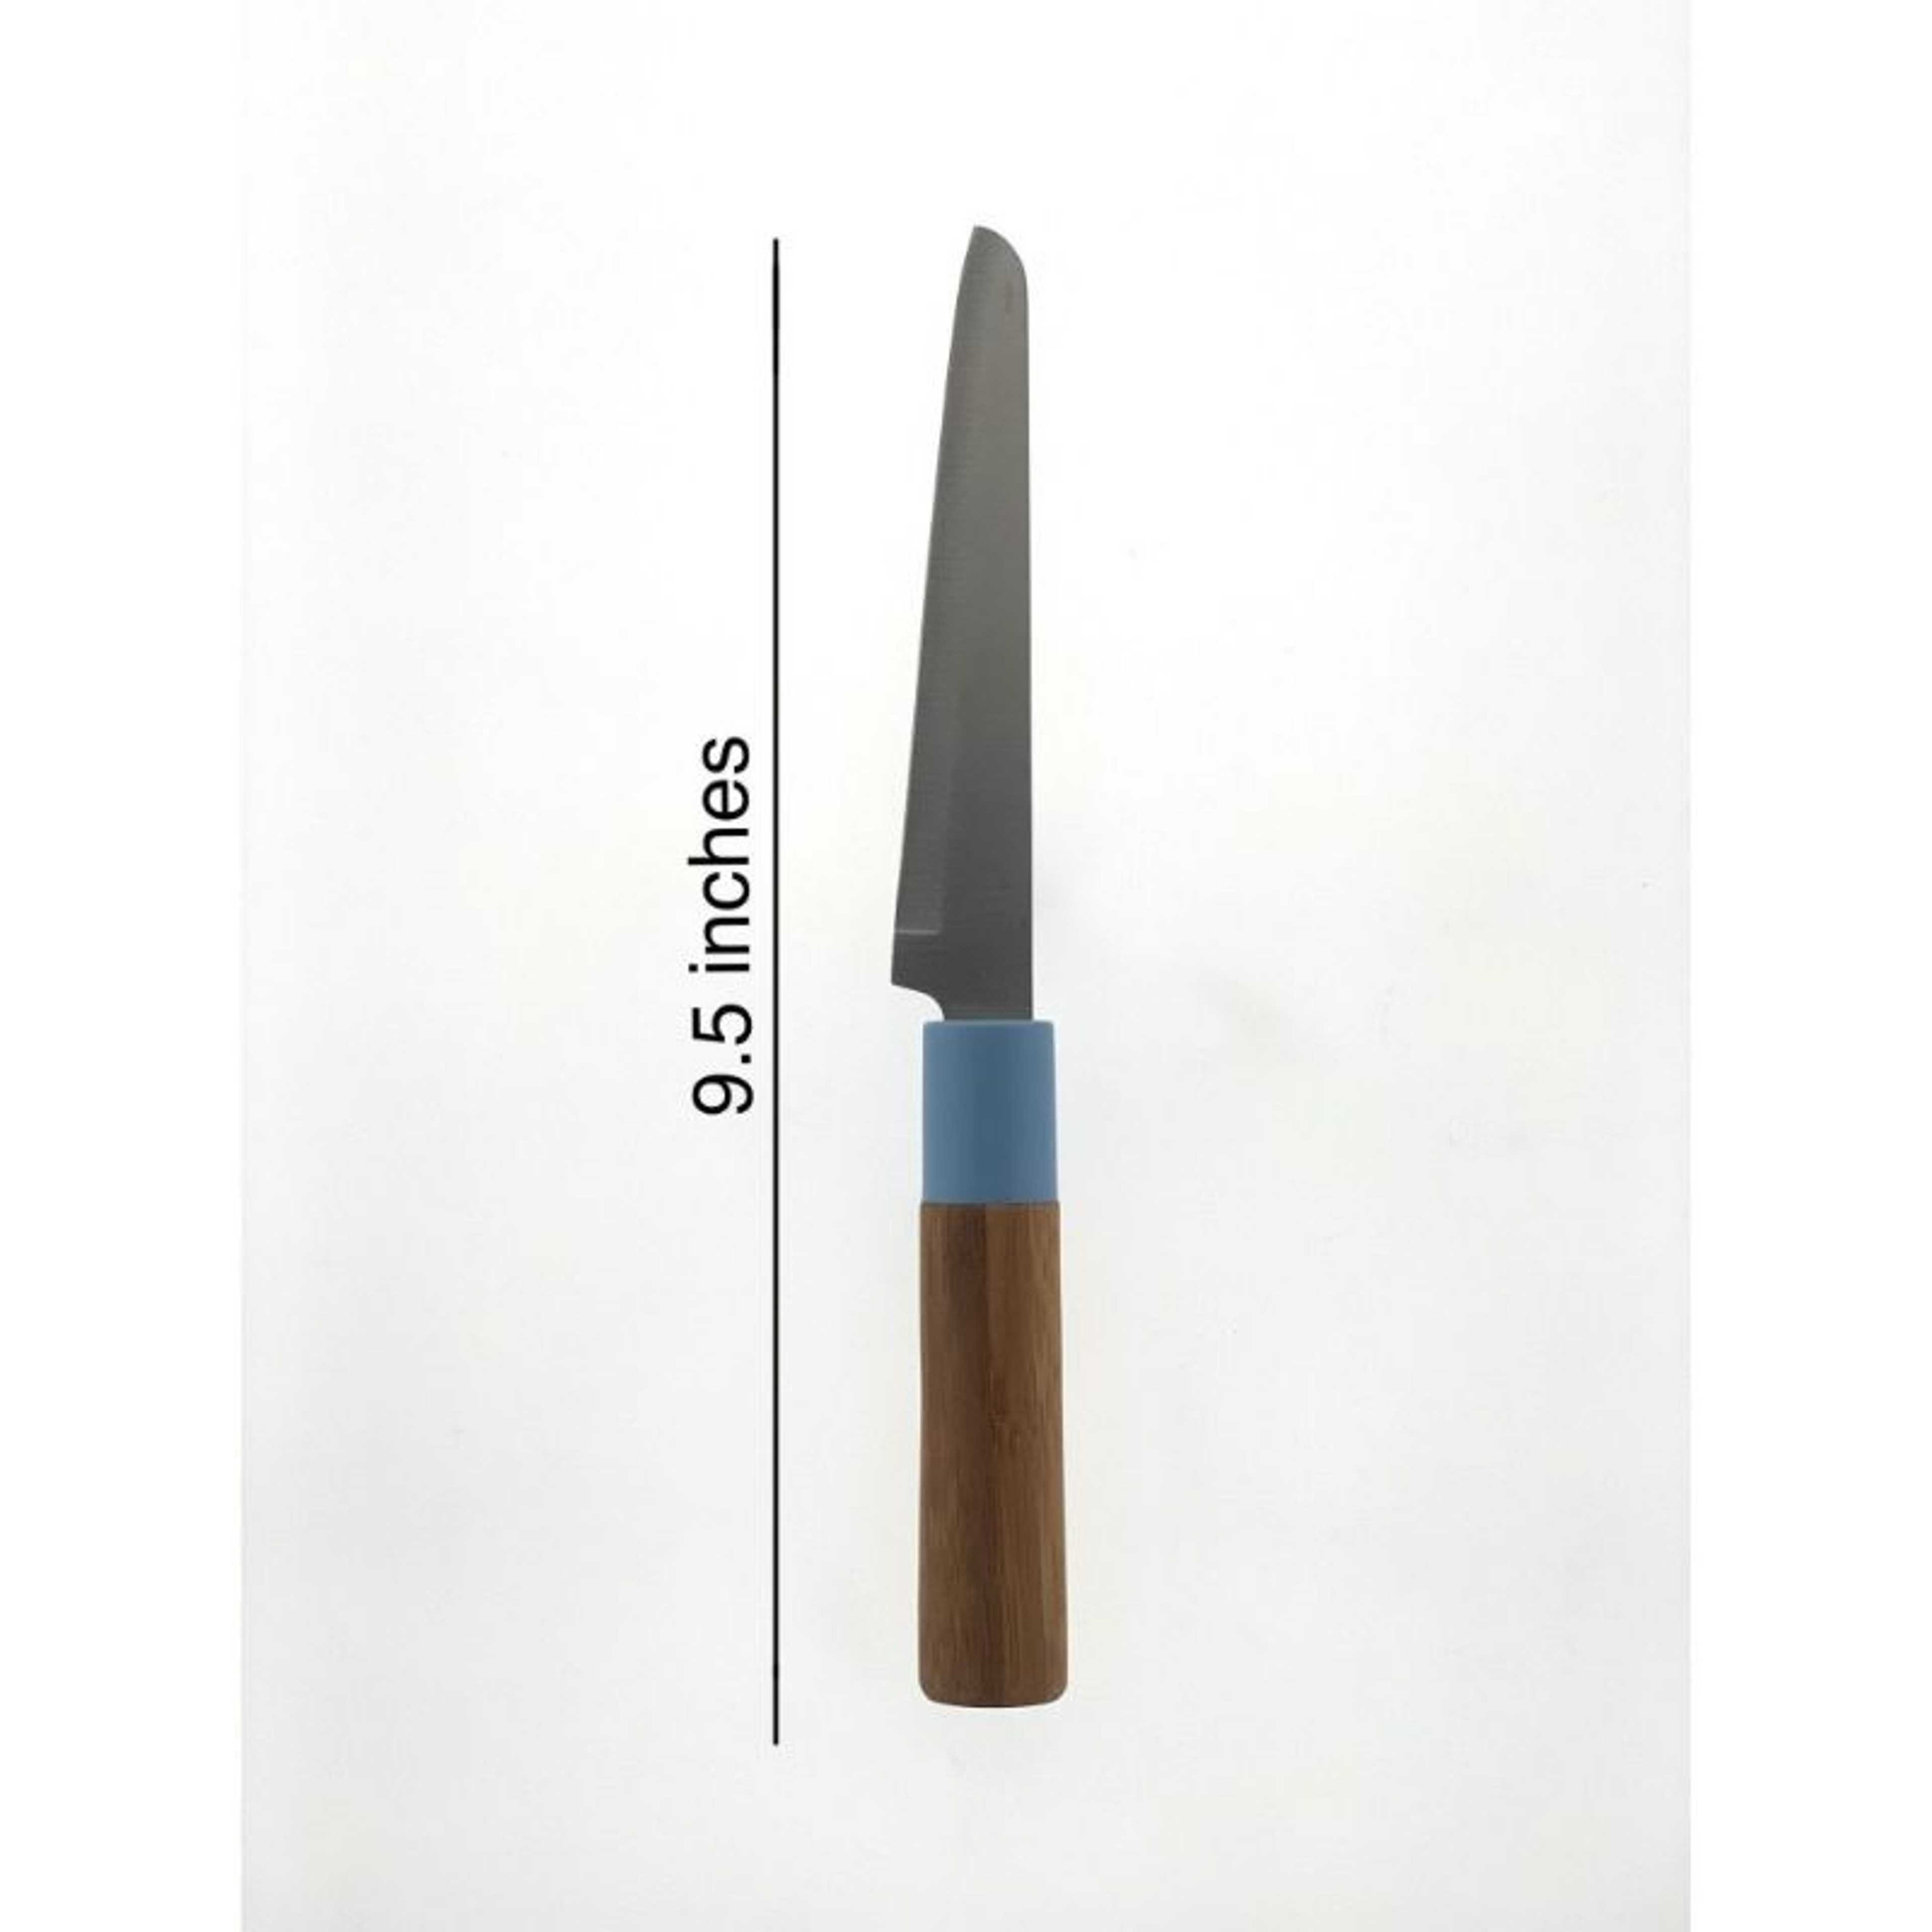 J&T Stainless Steel Utility Knife (SK-1439)